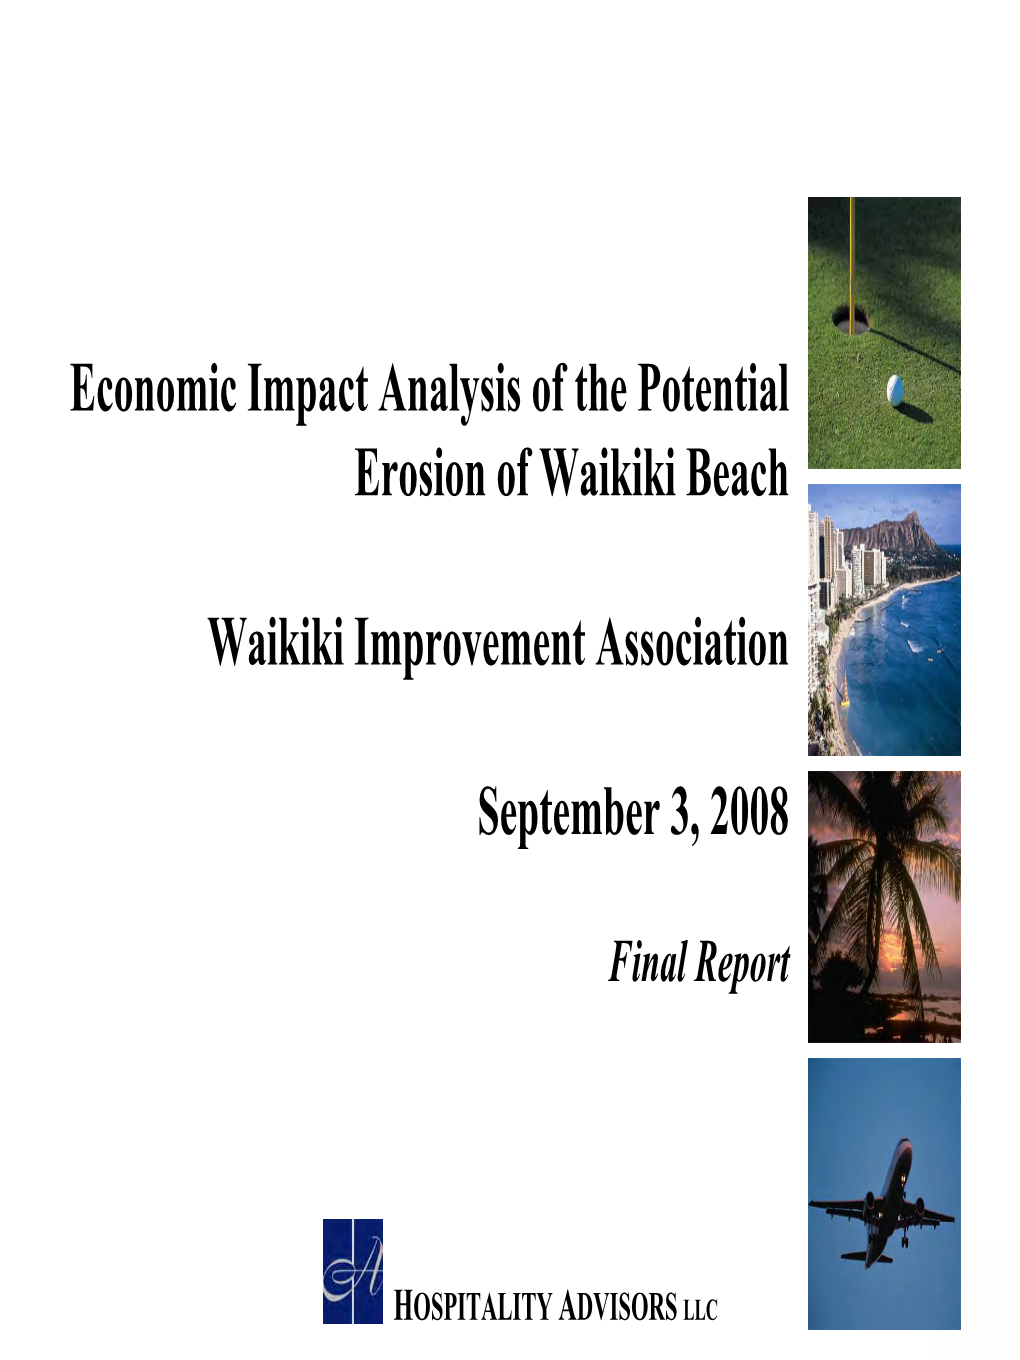 Economic Impact Analysis of the Potential Erosion of Waikiki Beach